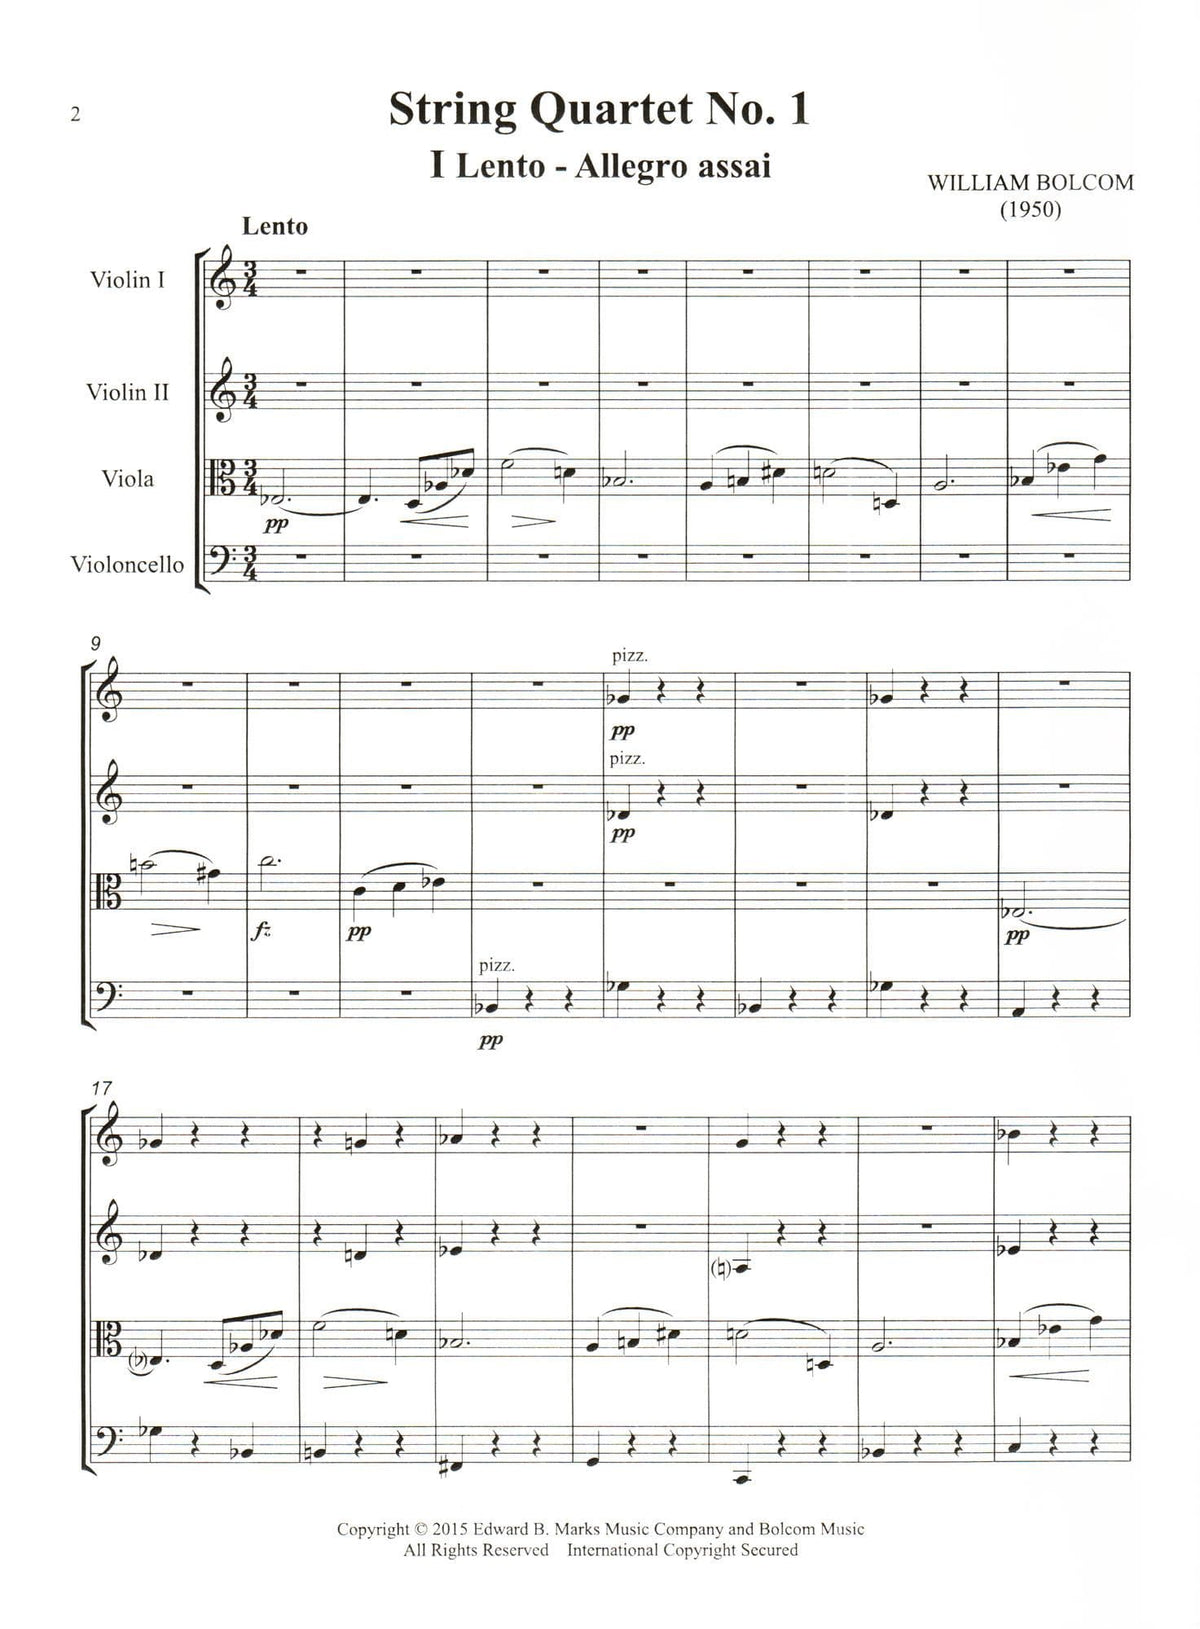 Bolcom, William - String Quartet No. 1 - Score and Parts - Edward B. Marks Music Company